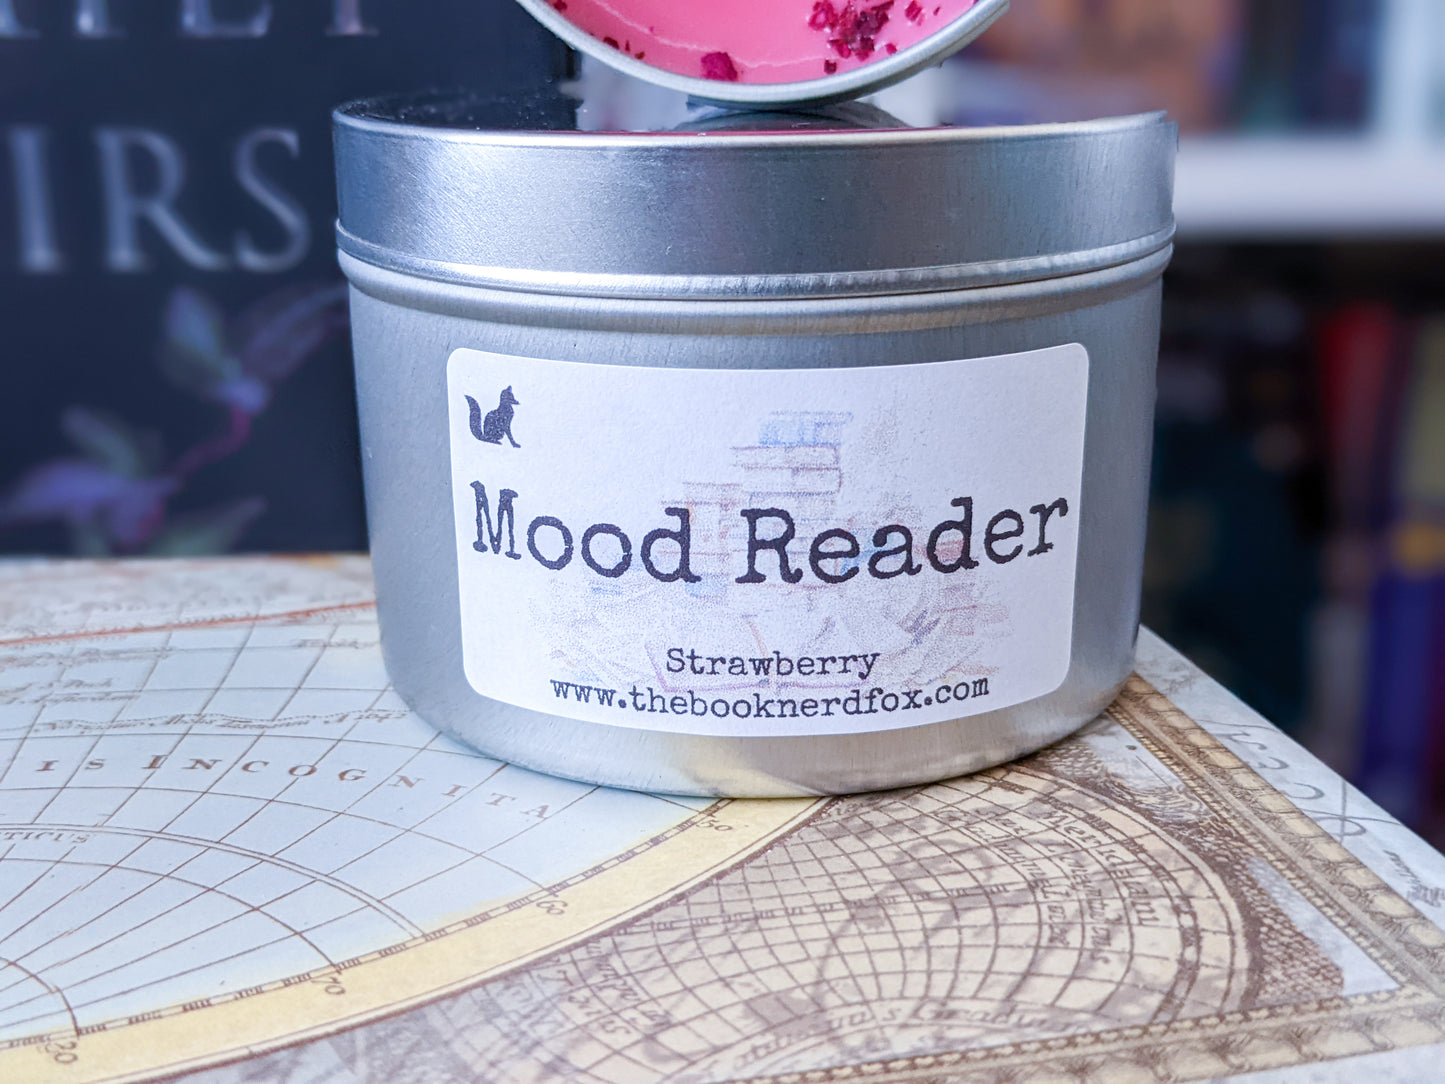 Mood Reader - Strawberry